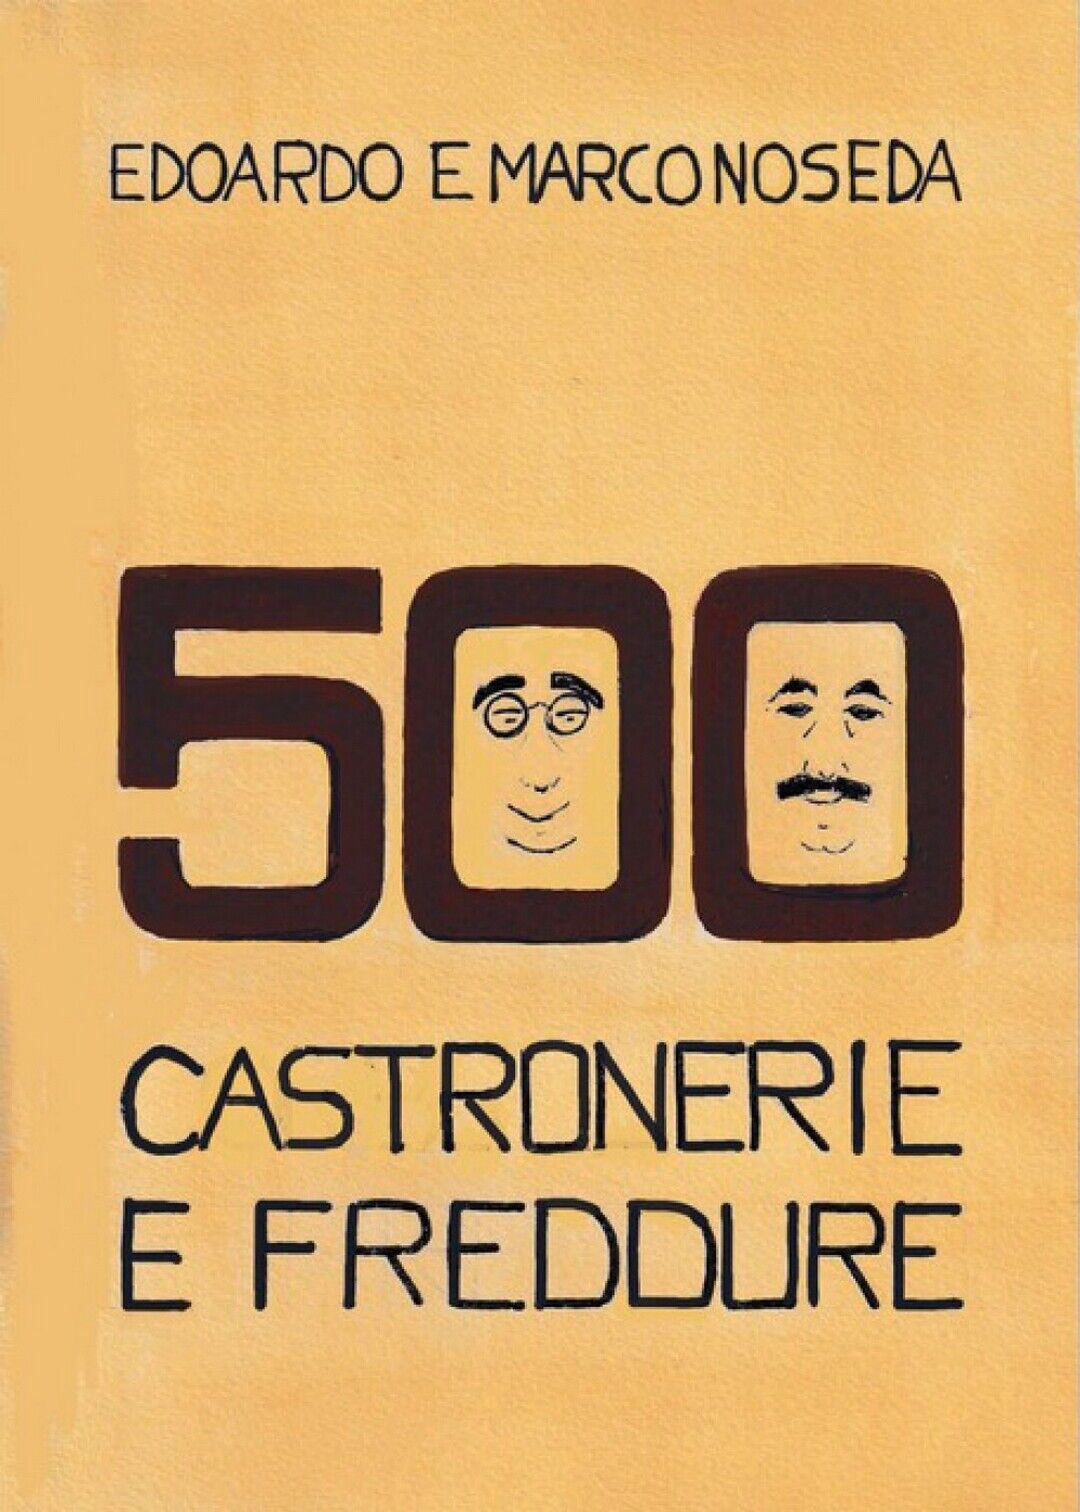 500 Castronerie e Freddure  di Edoardo Noseda,  2020,  Youcanprint